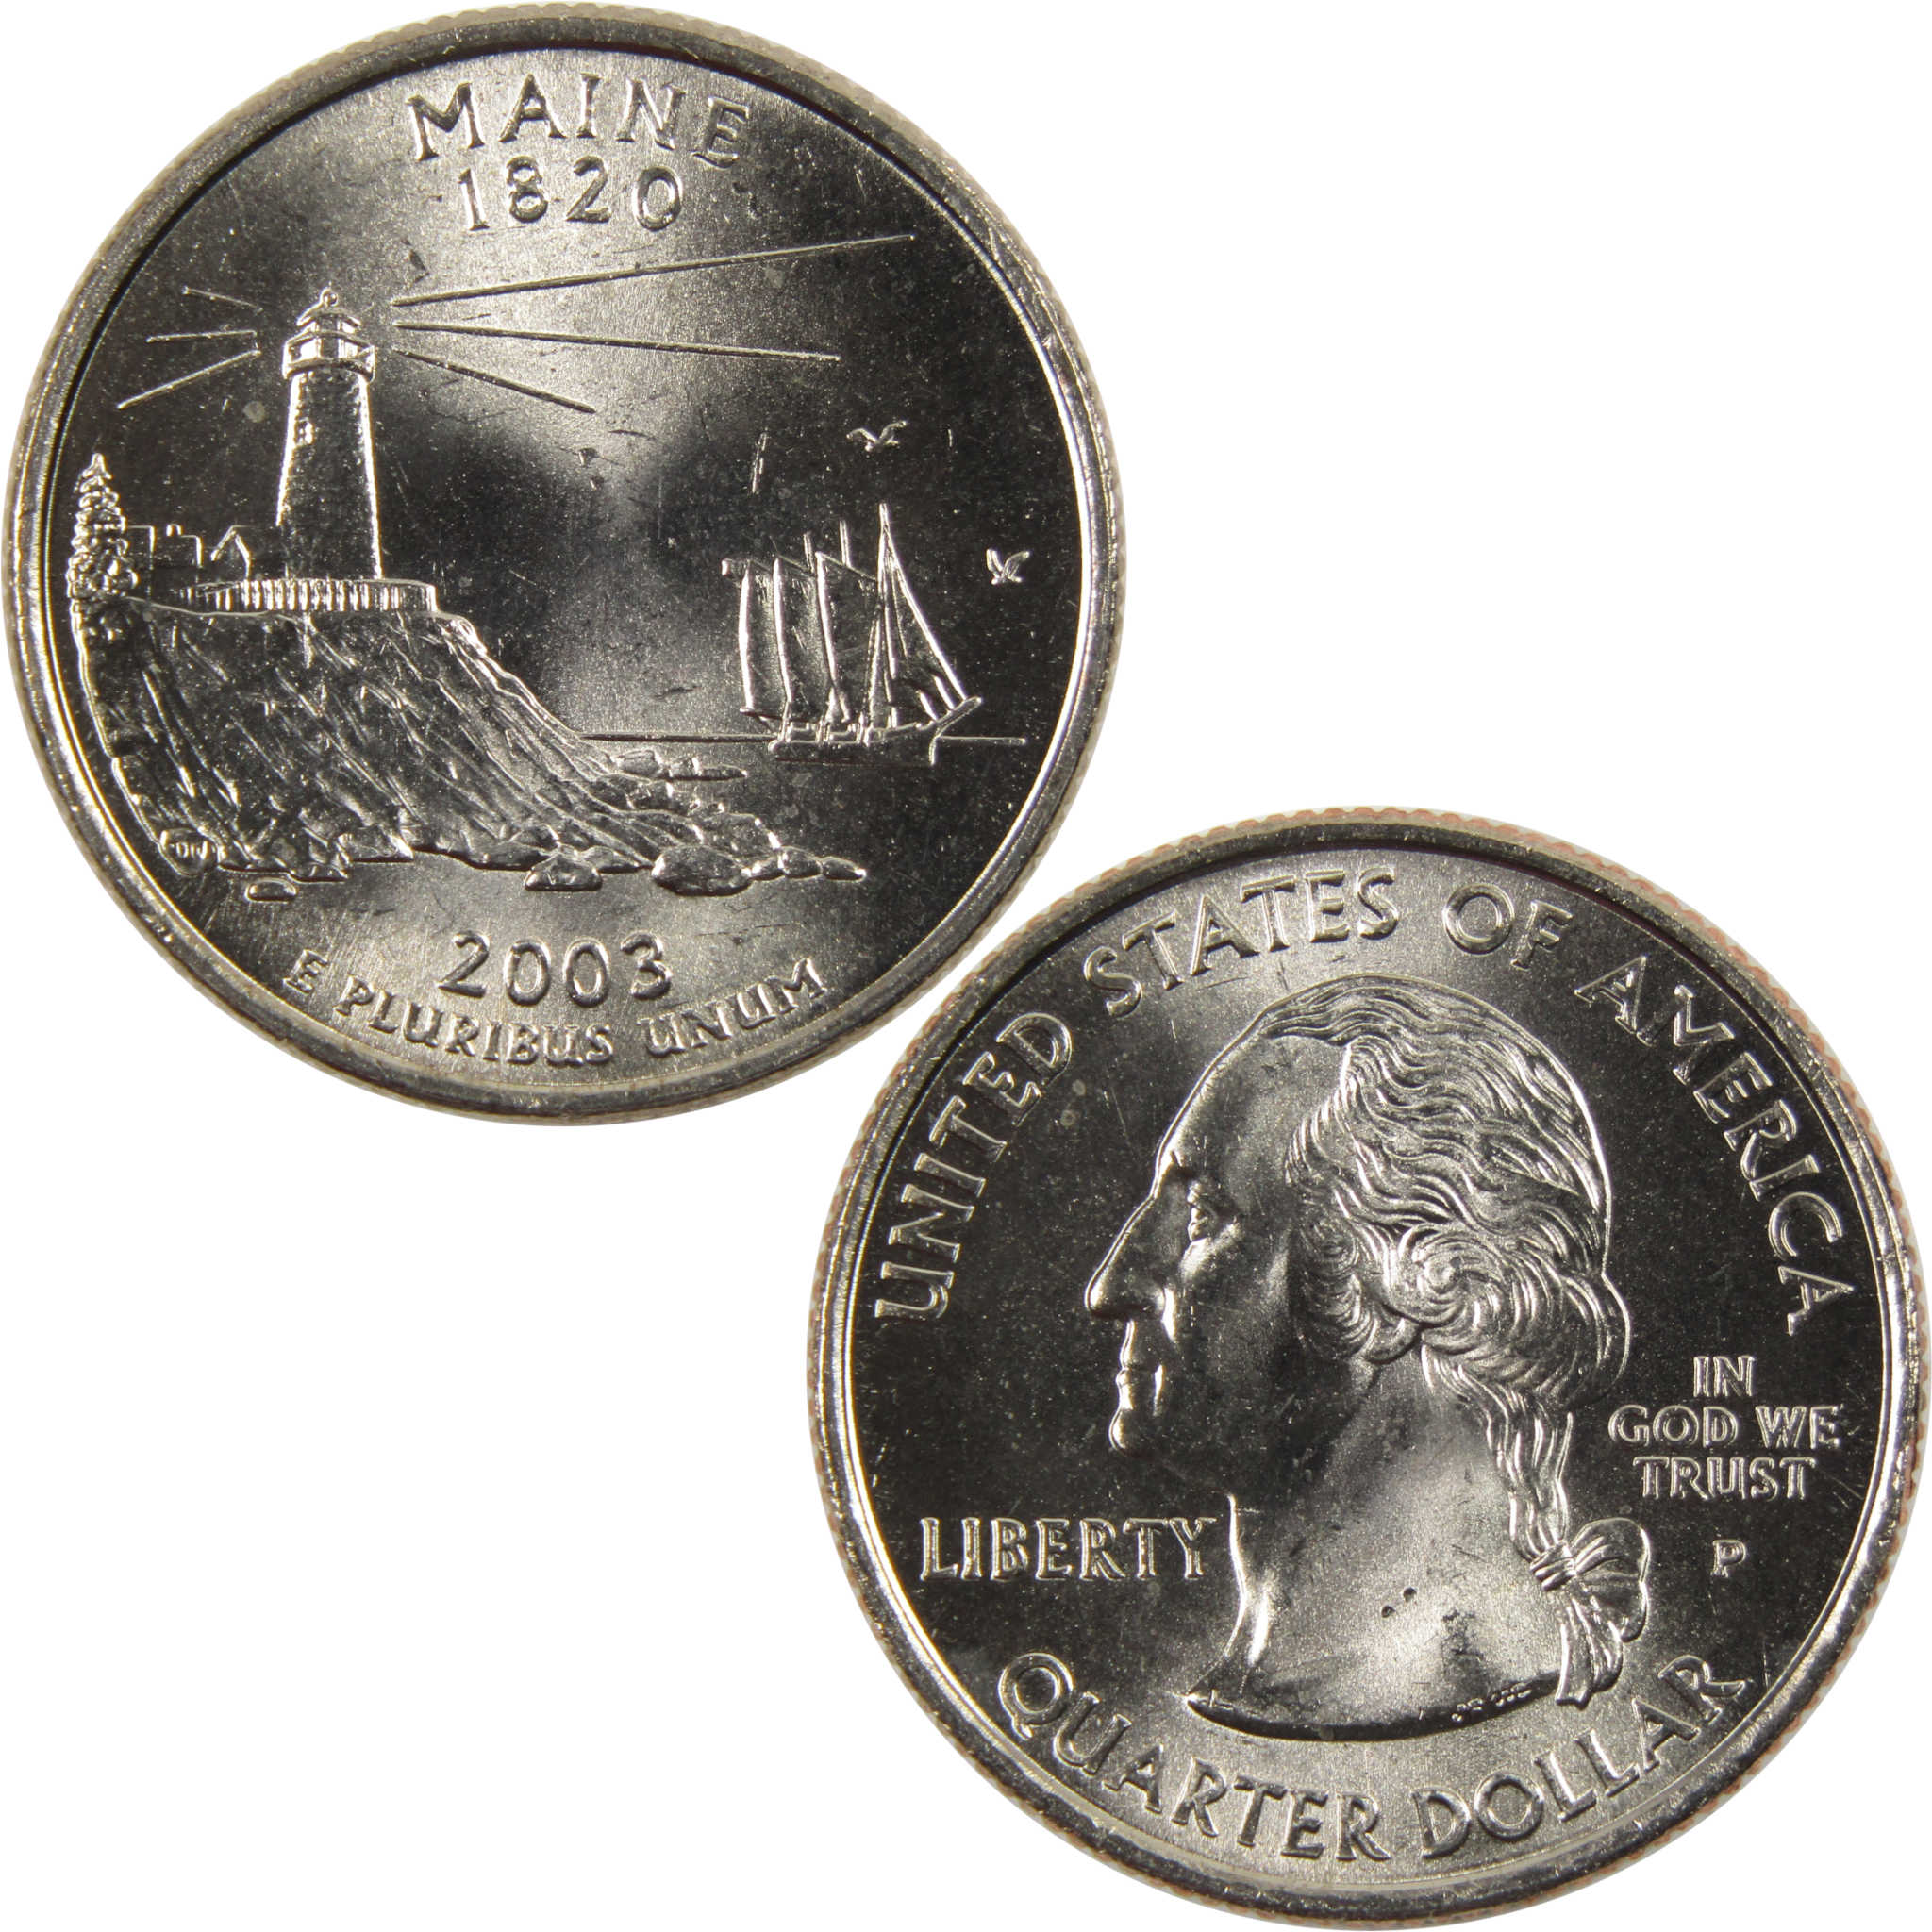 2003 P Maine State Quarter BU Uncirculated Clad 25c Coin